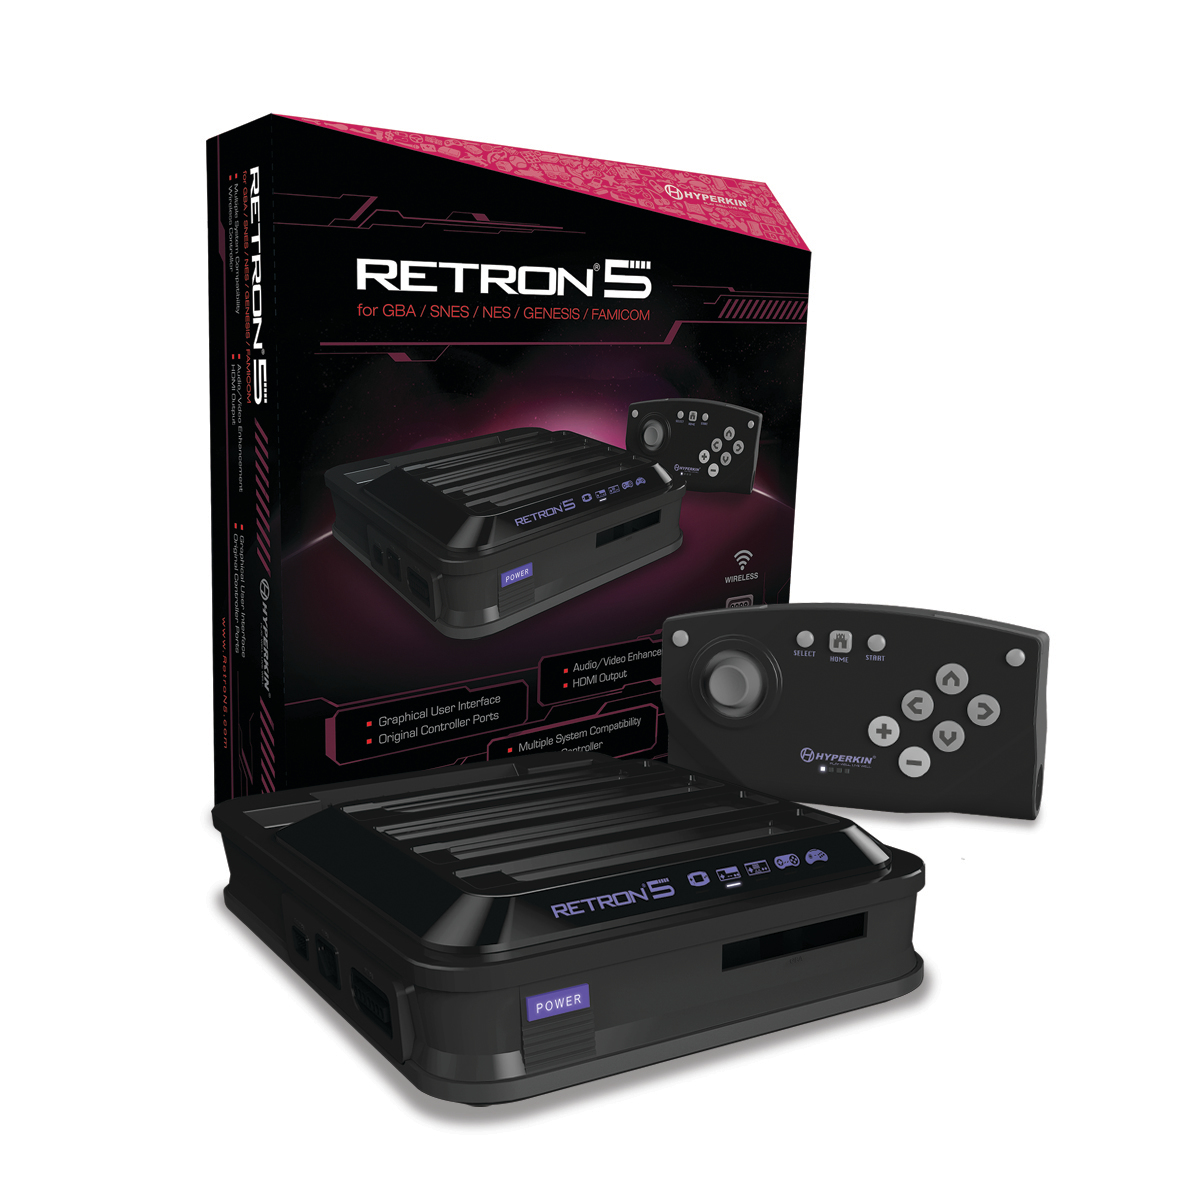 Hyperkin M01688-BK Black Retron 5 Hd Gaming Console For